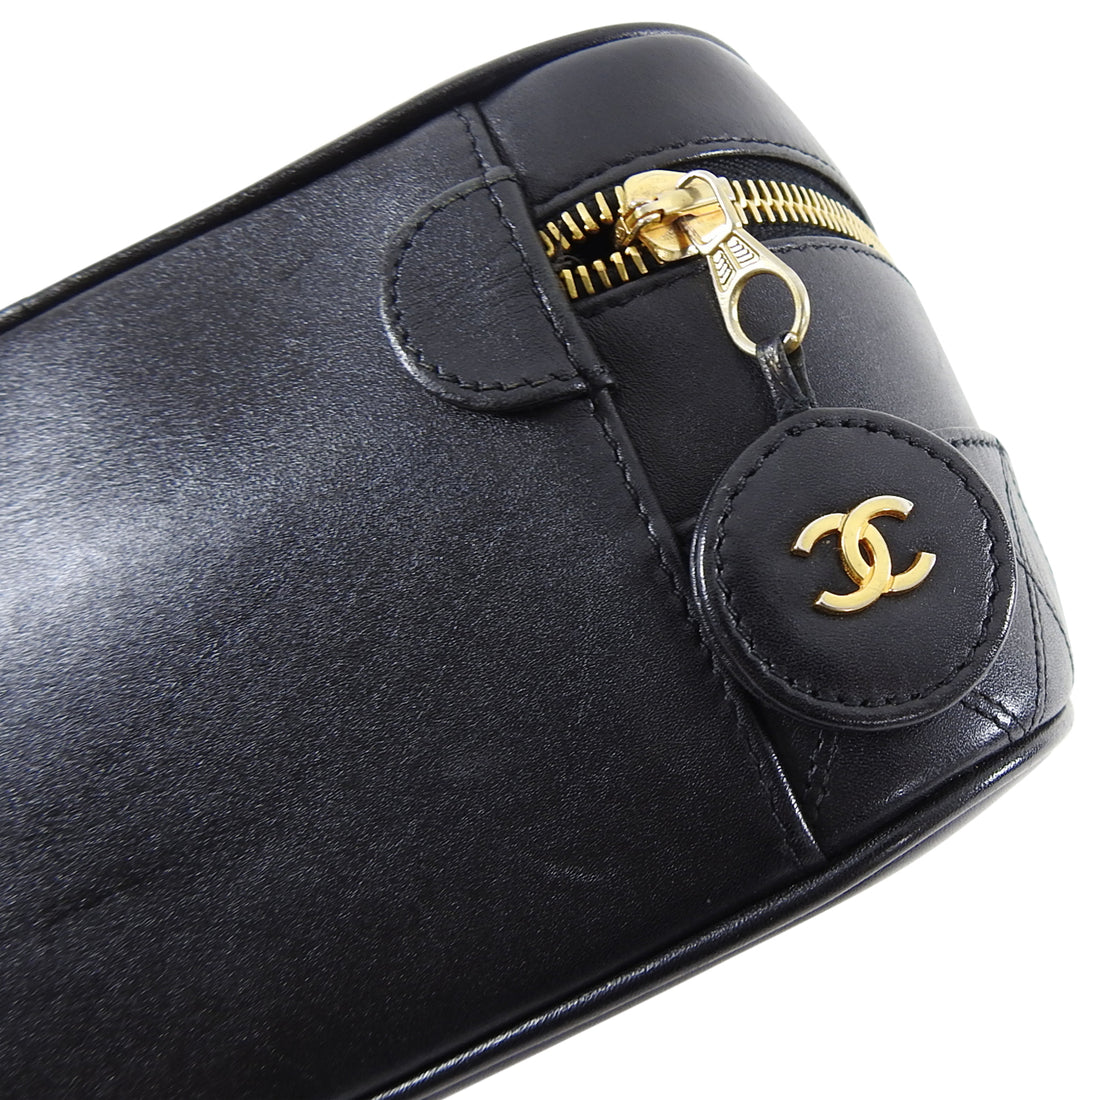 Black Vintage Chanel 1994 vanity case